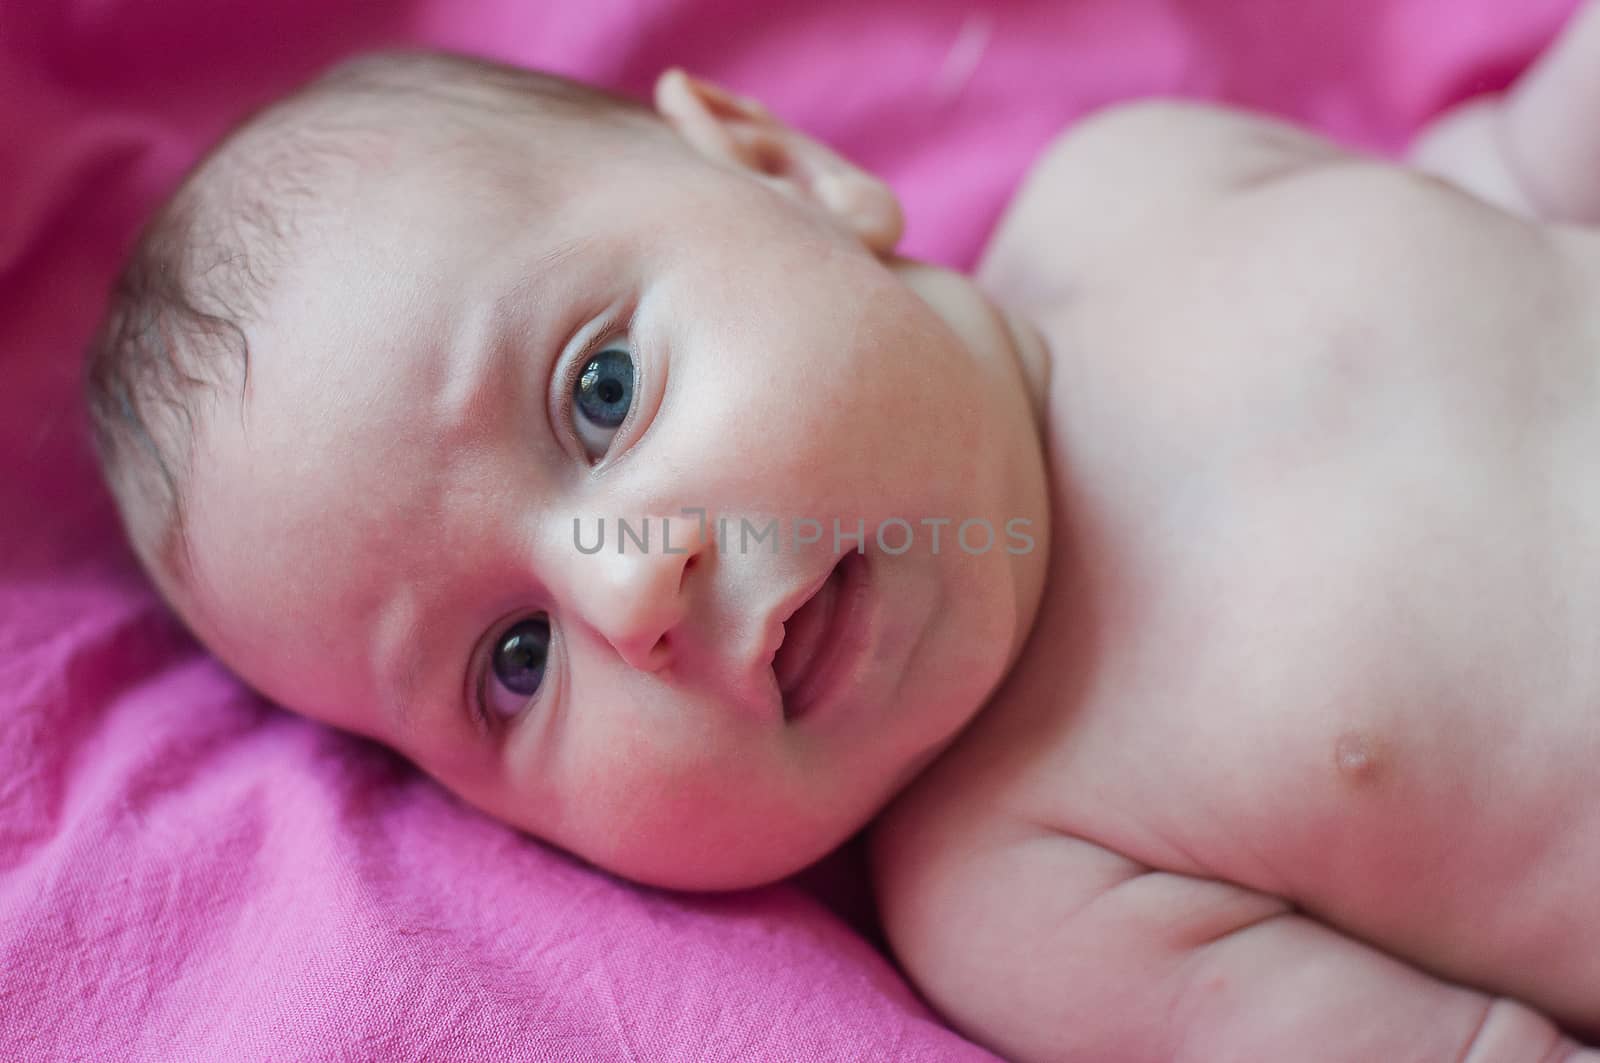 Little feared baby closeup portrait